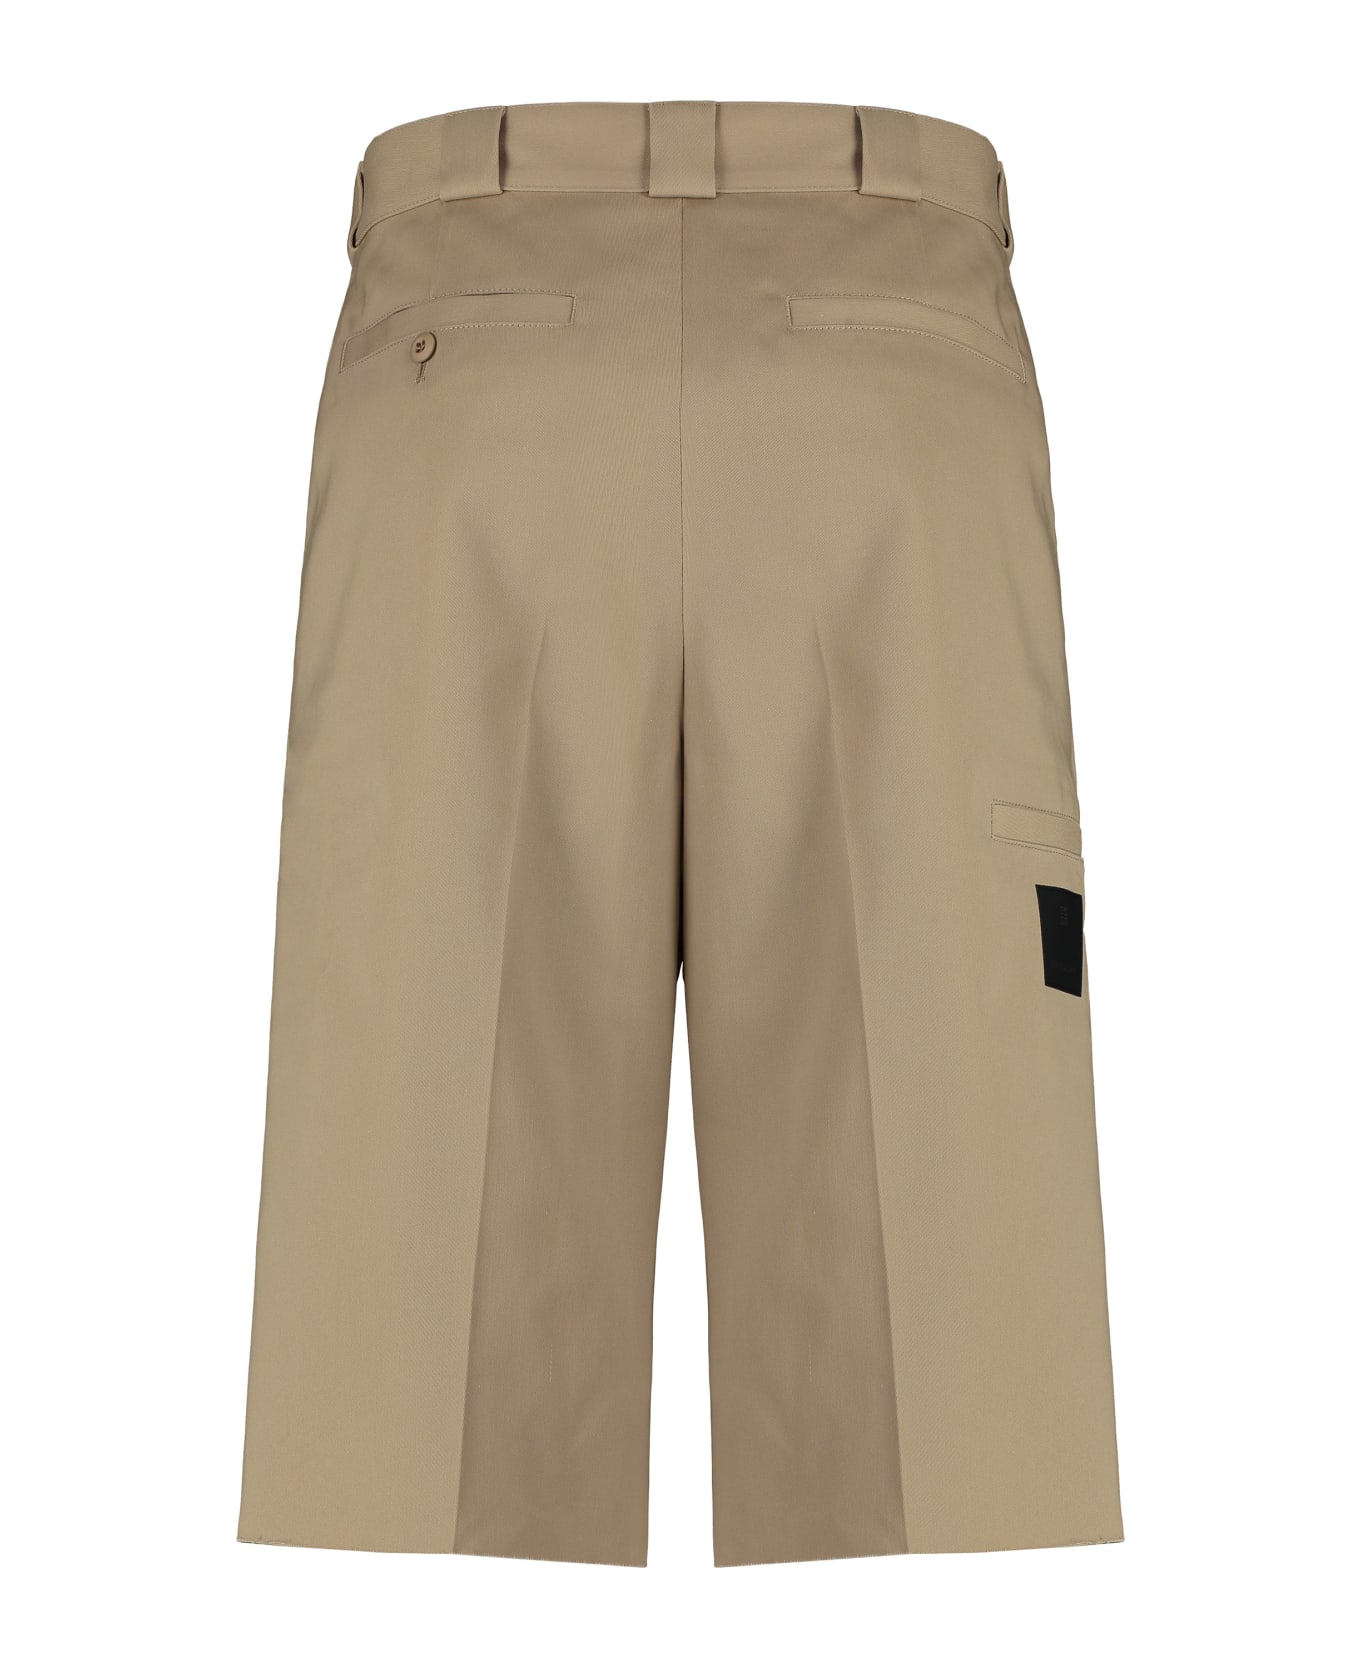 Givenchy Blend Cotton Bermuda Shorts - Beige